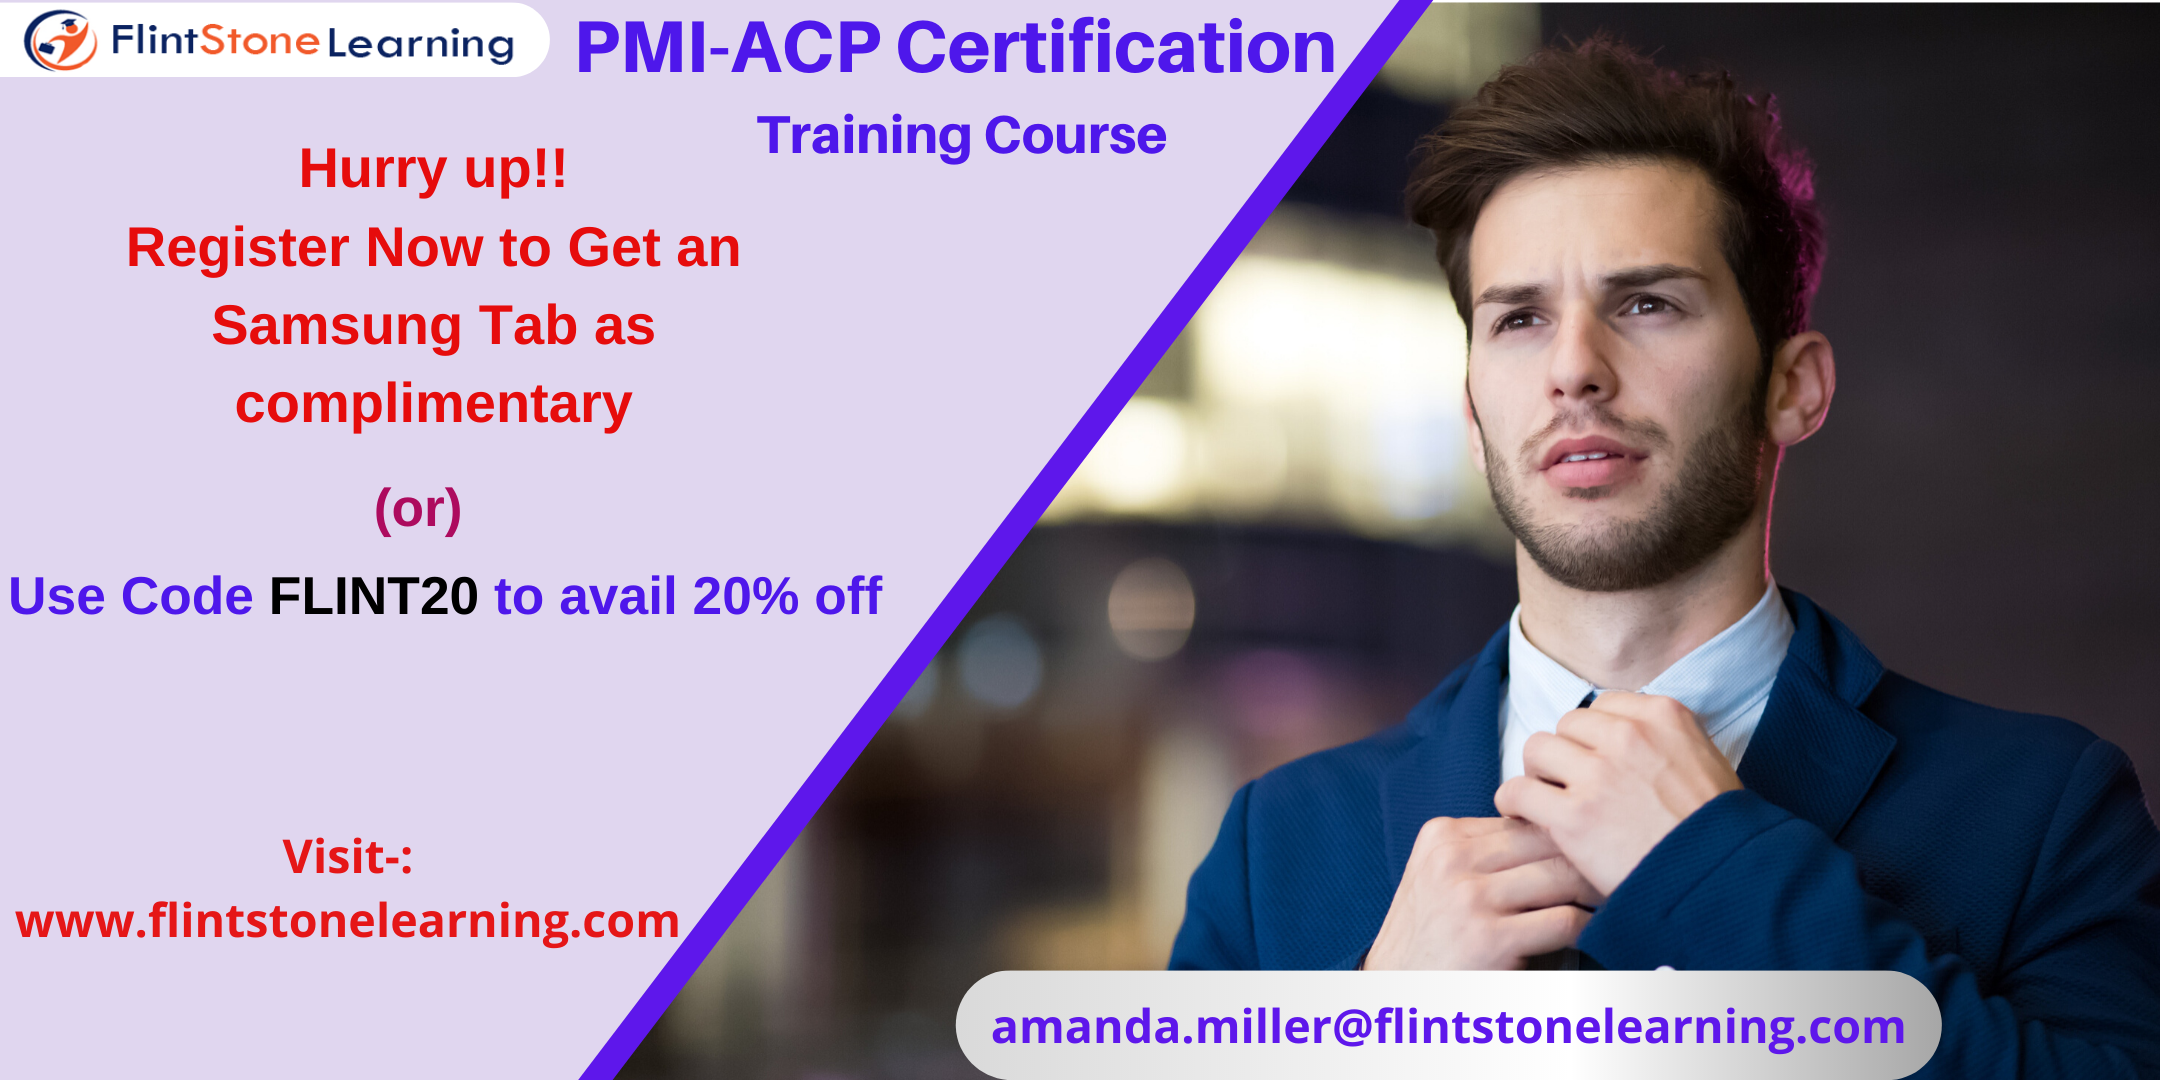 PMI-ACP Certification Training Course in East Palo Alto, CA